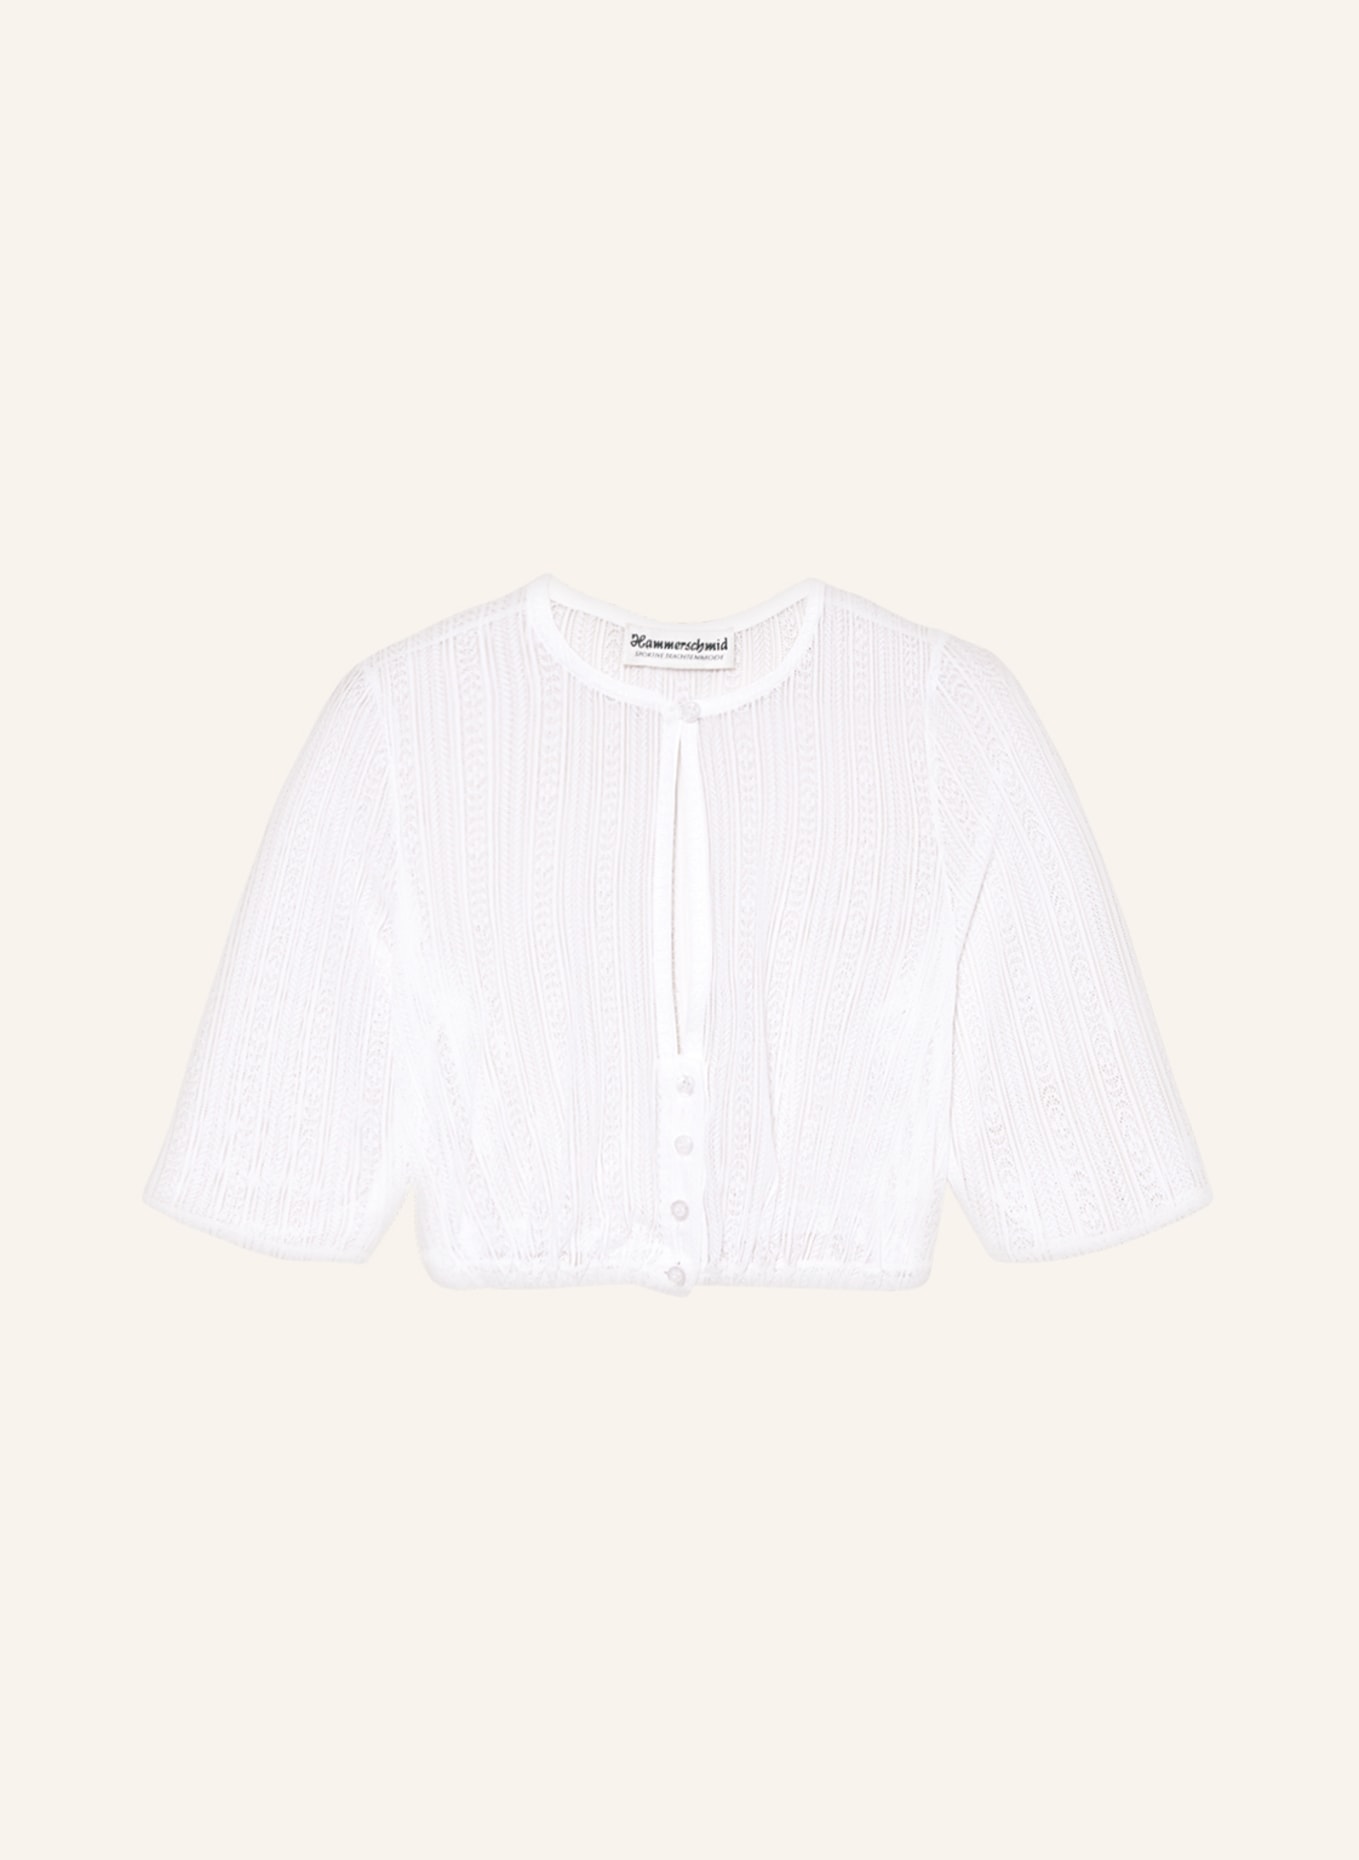 Hammerschmid Dirndl blouse made of lace, Color: WHITE (Image 1)